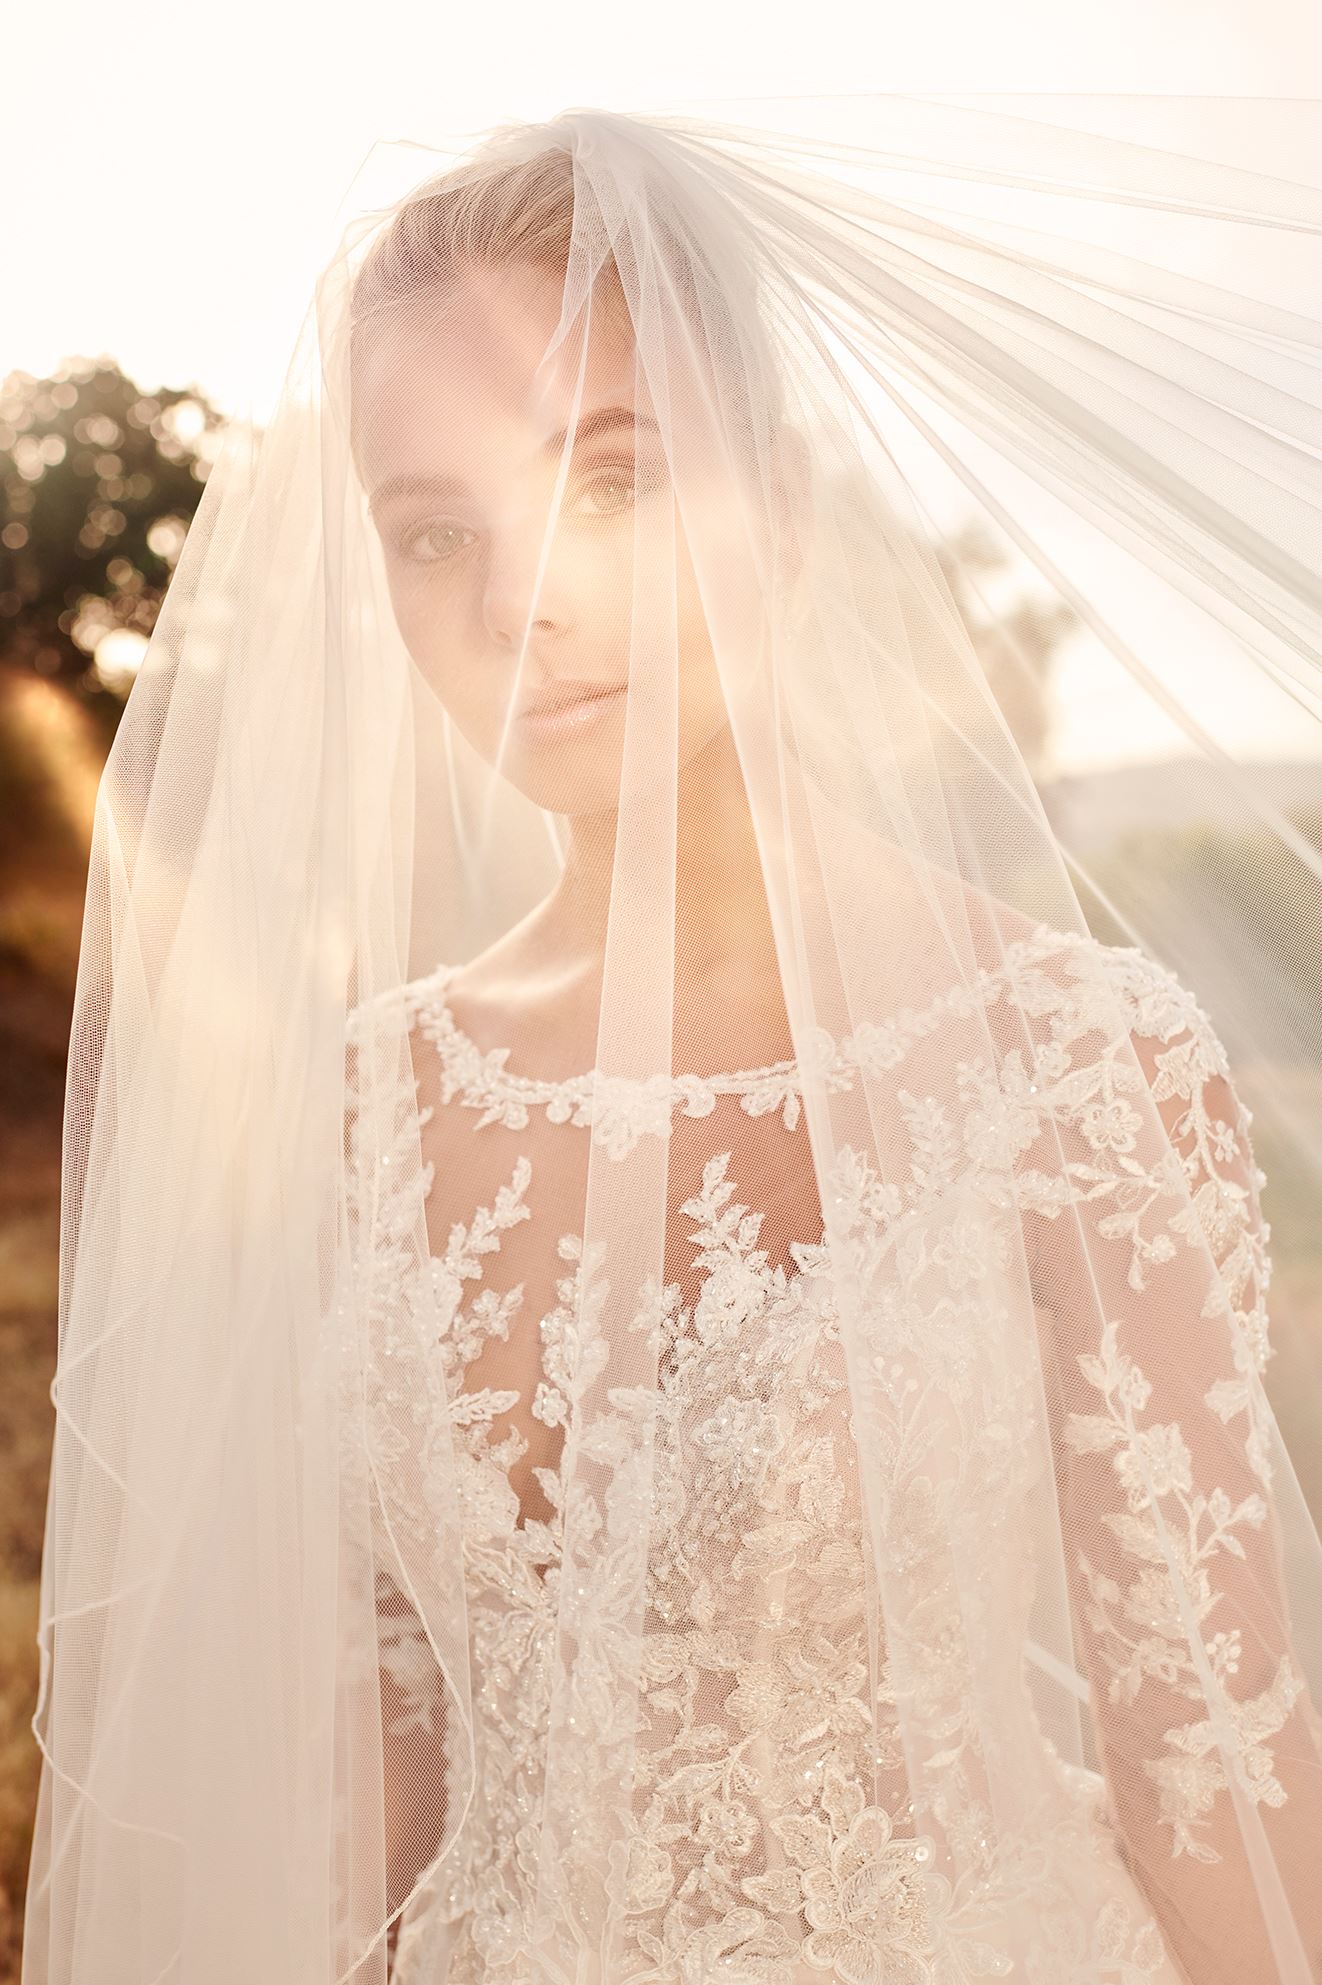 Blonde bride in long sleeve wedding dress and veil